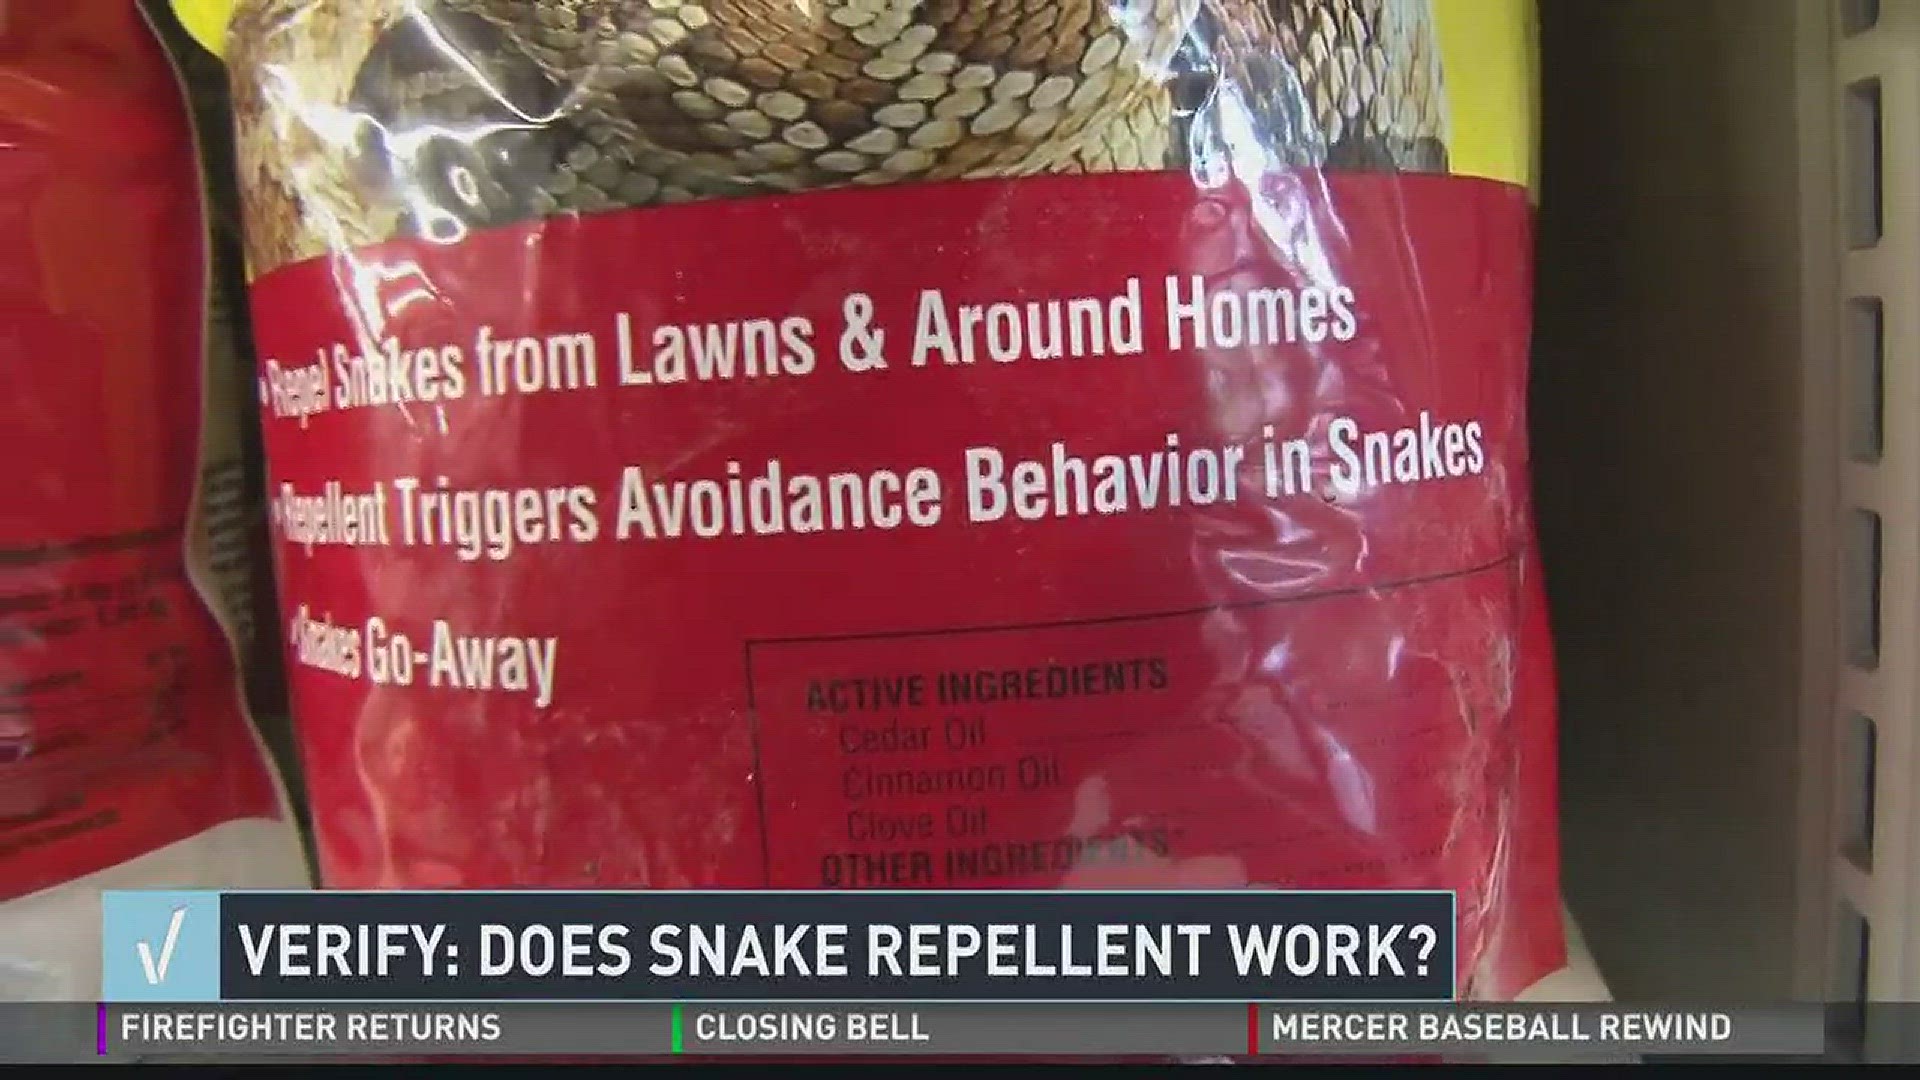 Verify: Does snake repellent work?